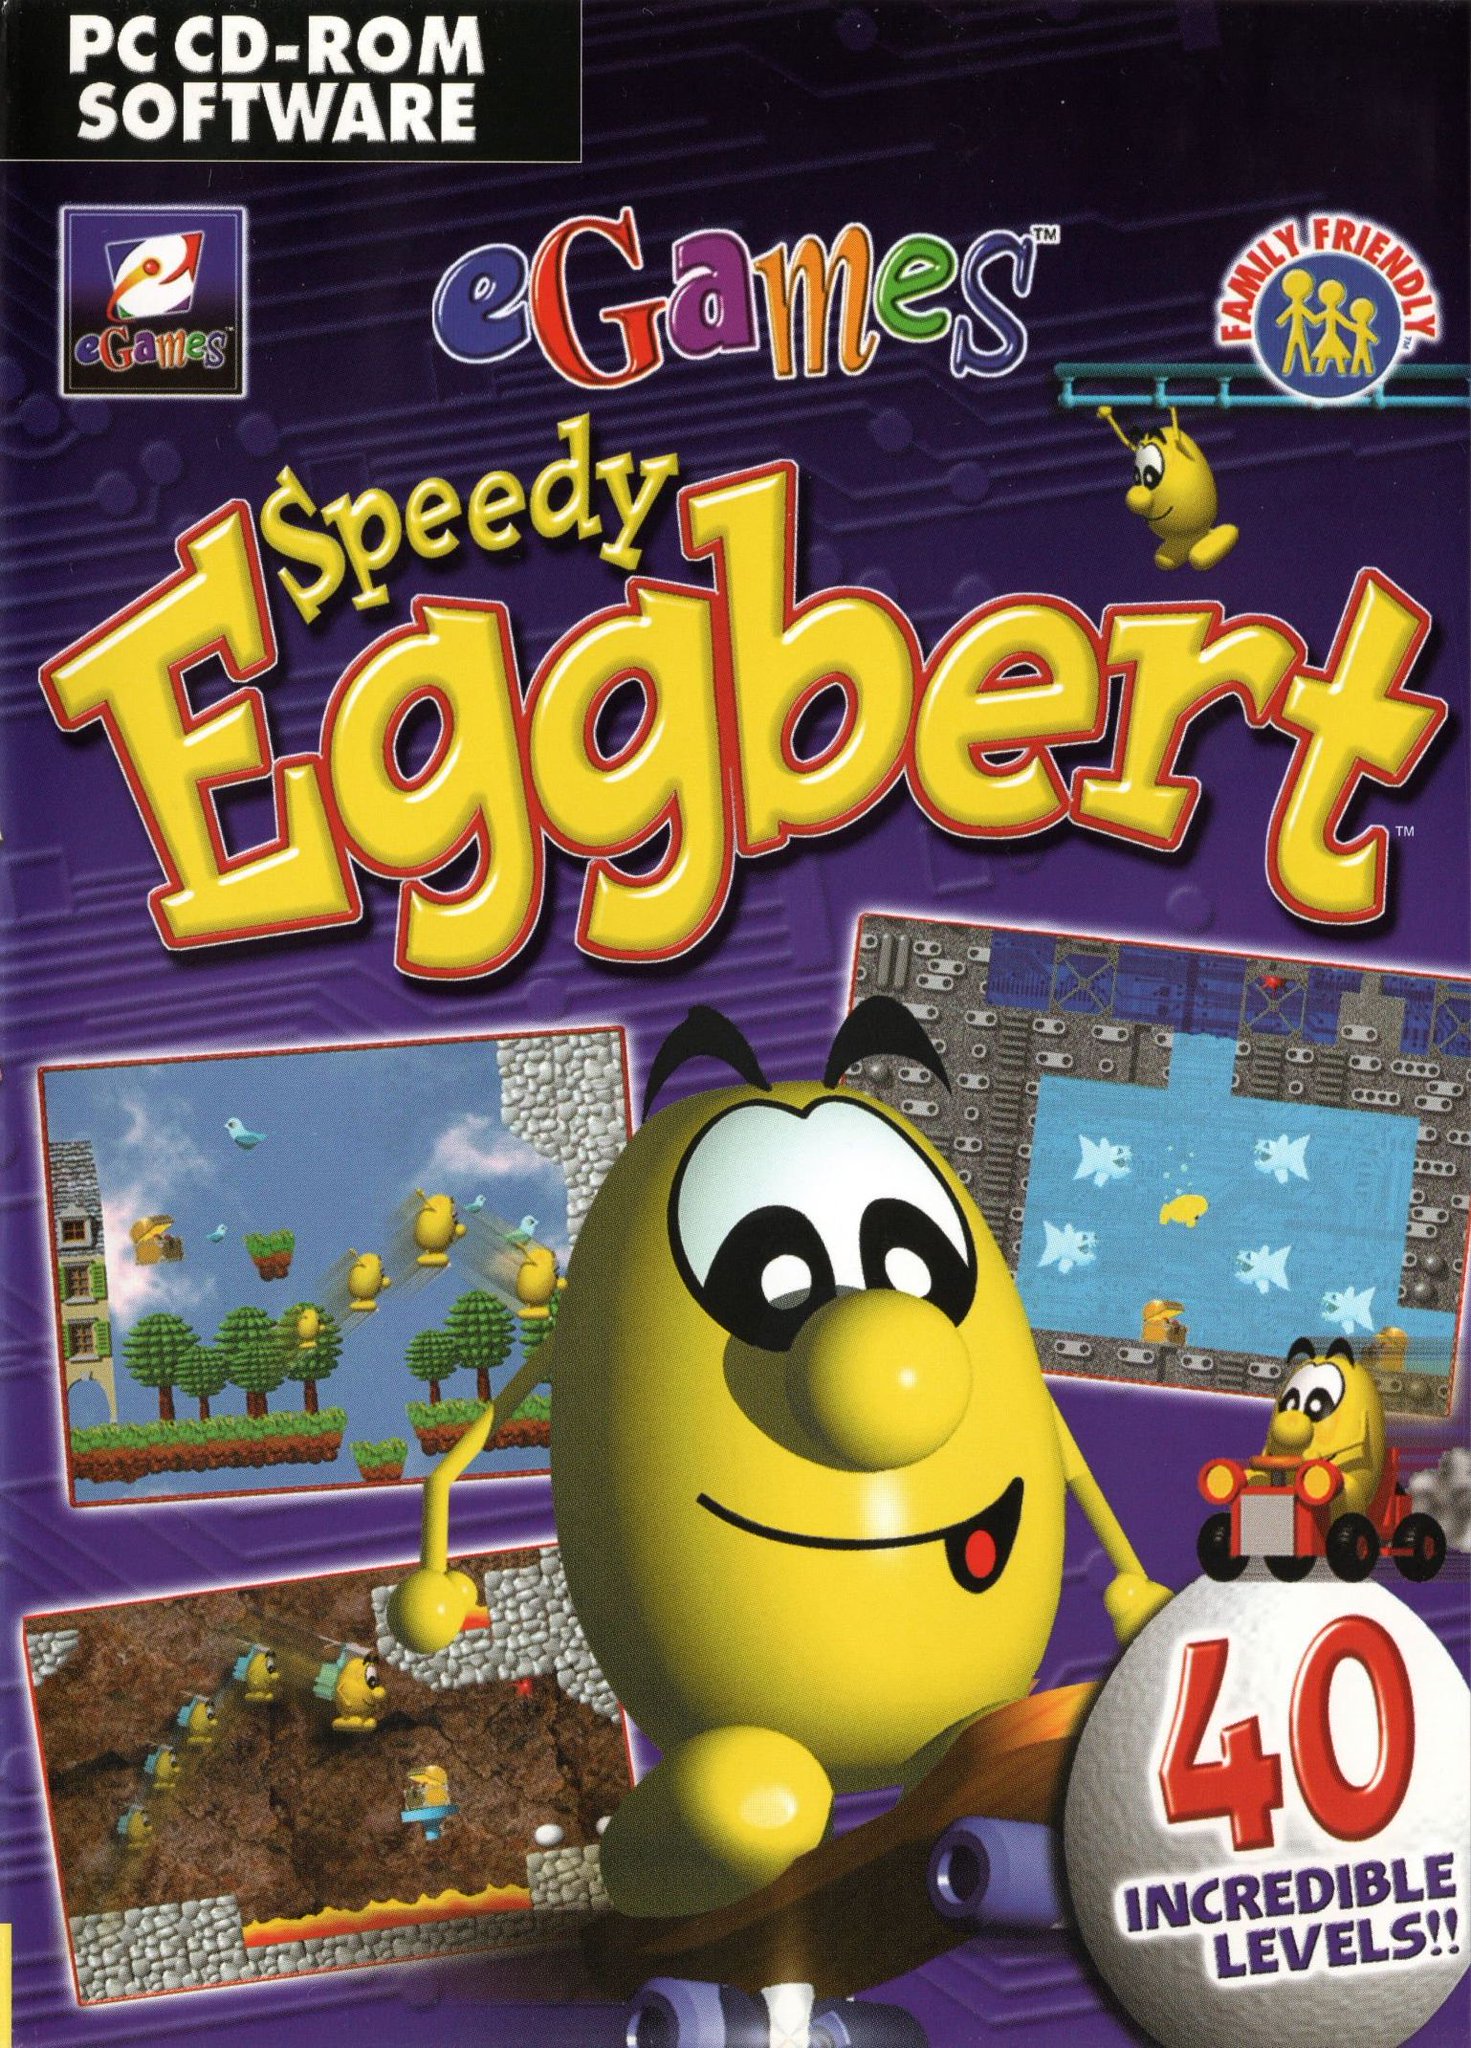 Speedy Eggbert + Plattform : Windows + NEU OVP - PC CD-ROM in